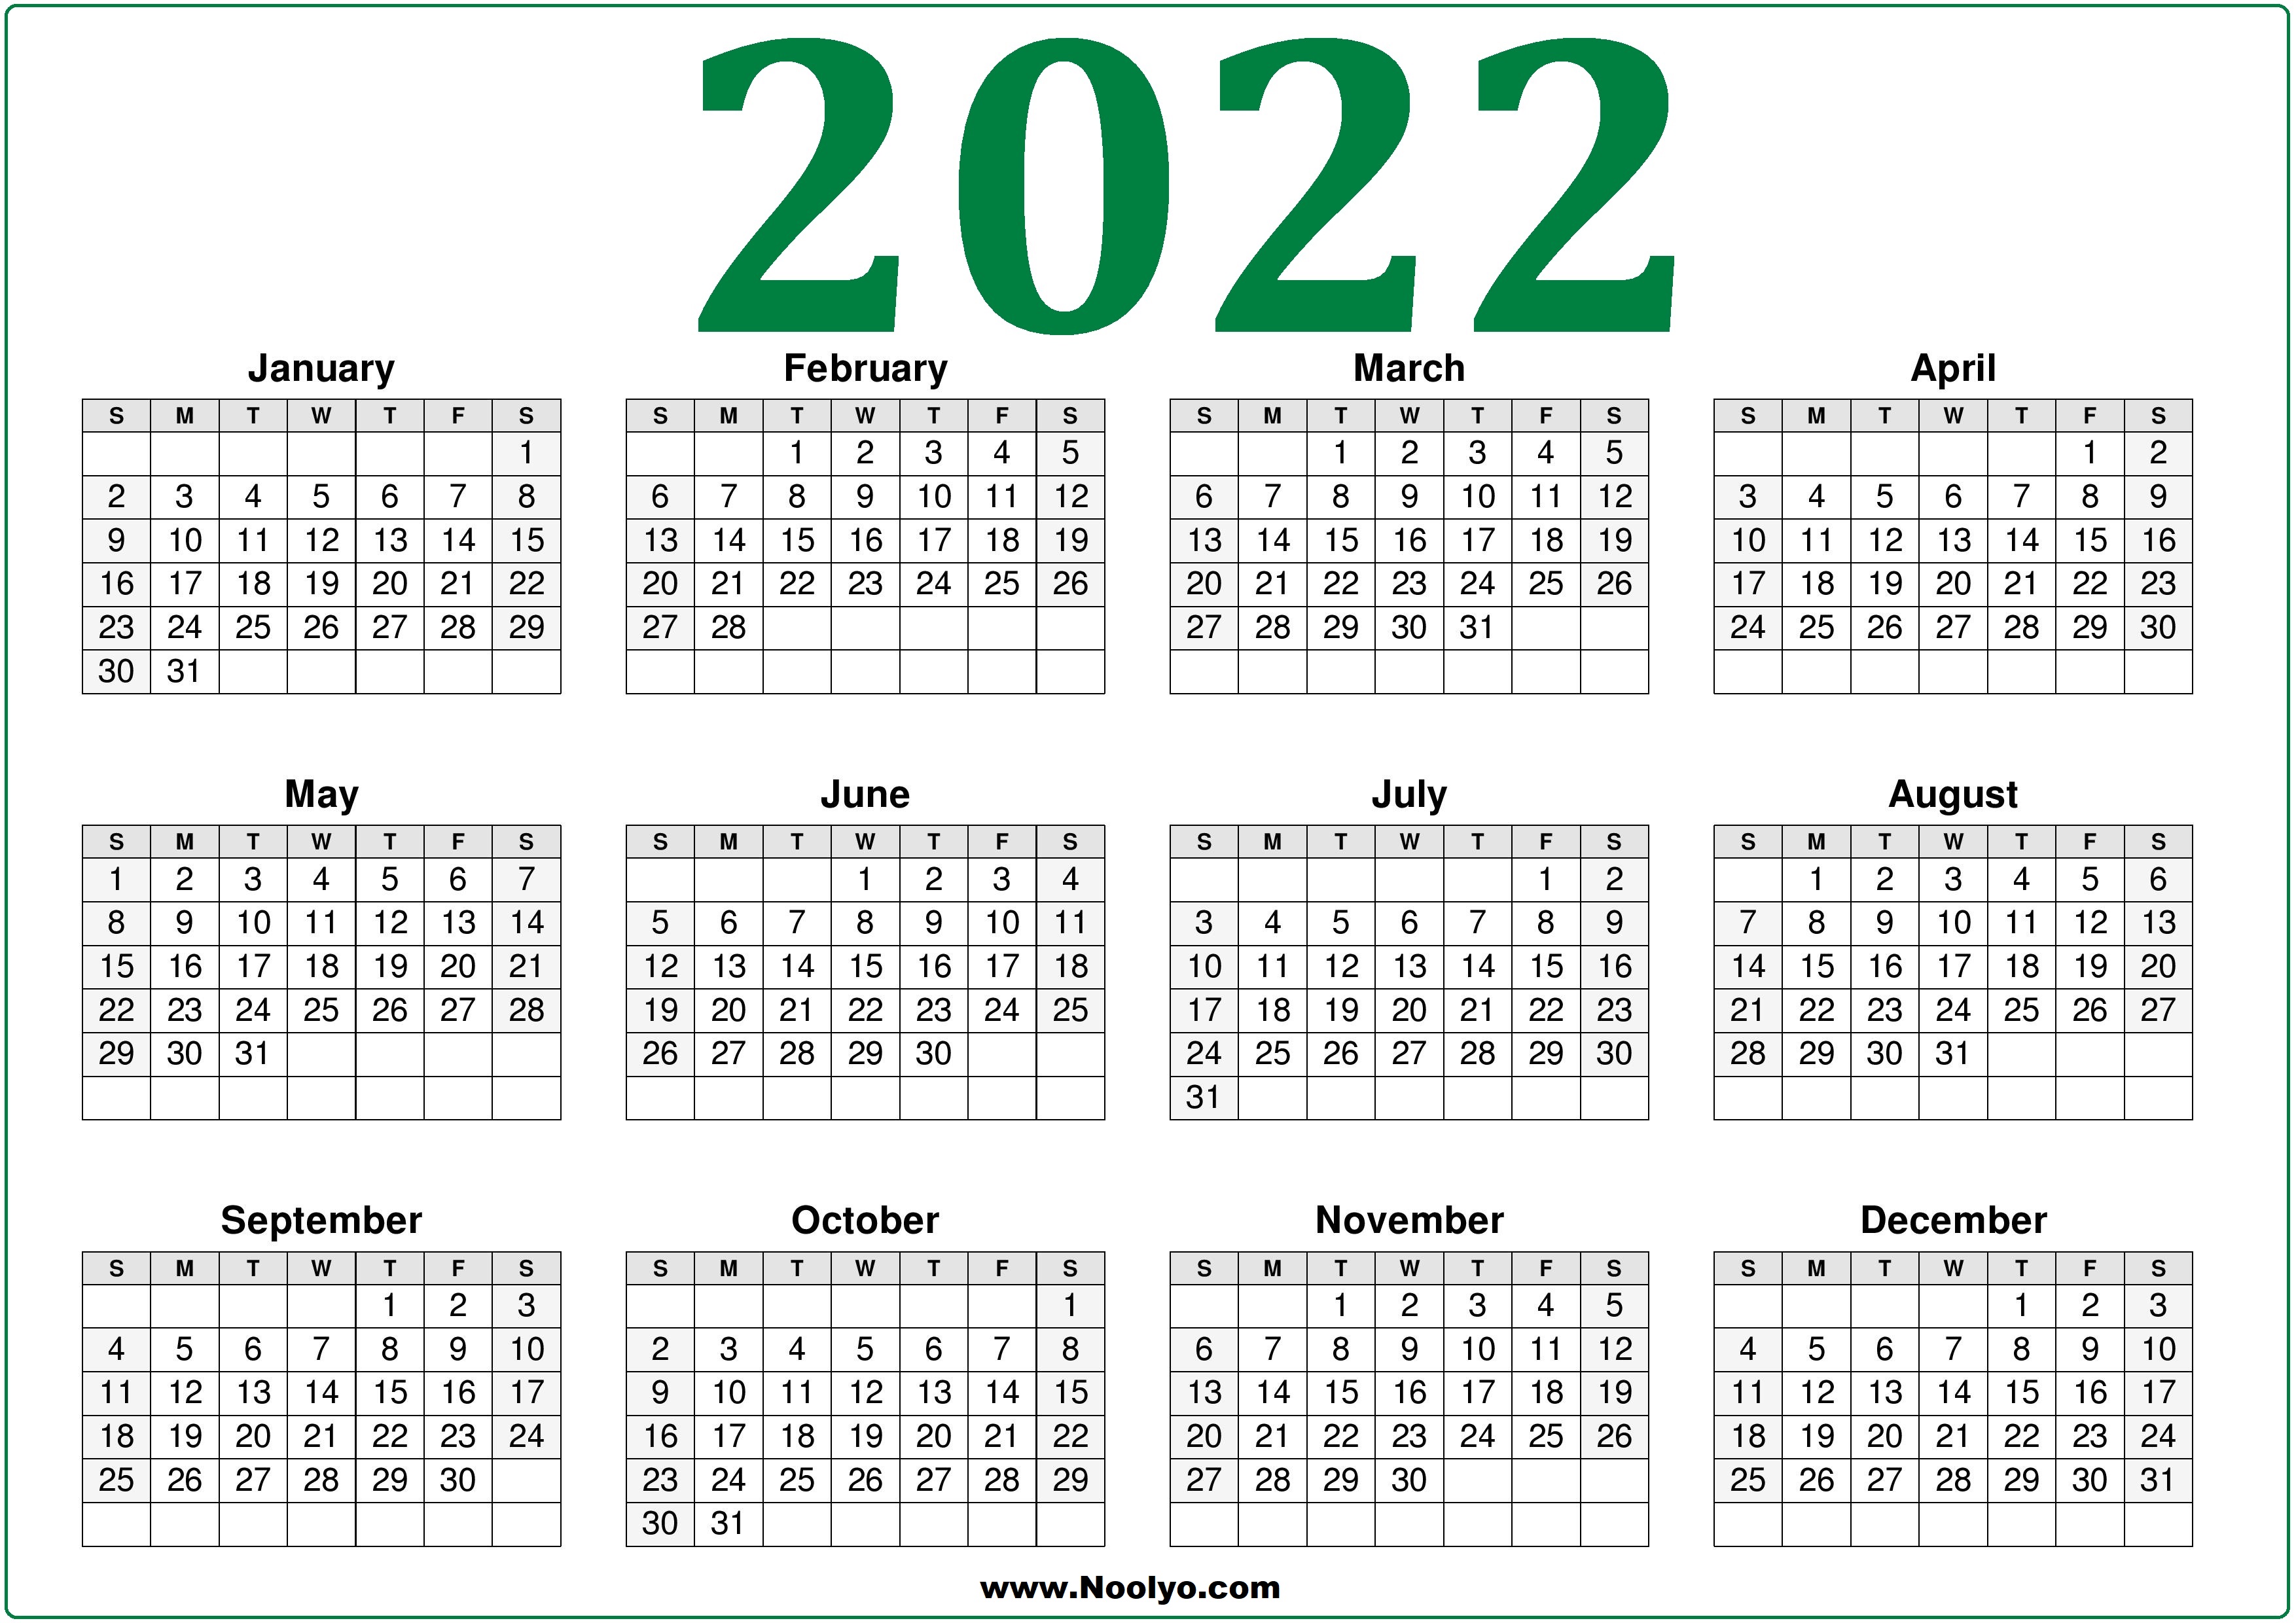 Free 2022 Calendars Horizontal Printable A4 Size Noolyo Com Calendars Porn Sex Picture 